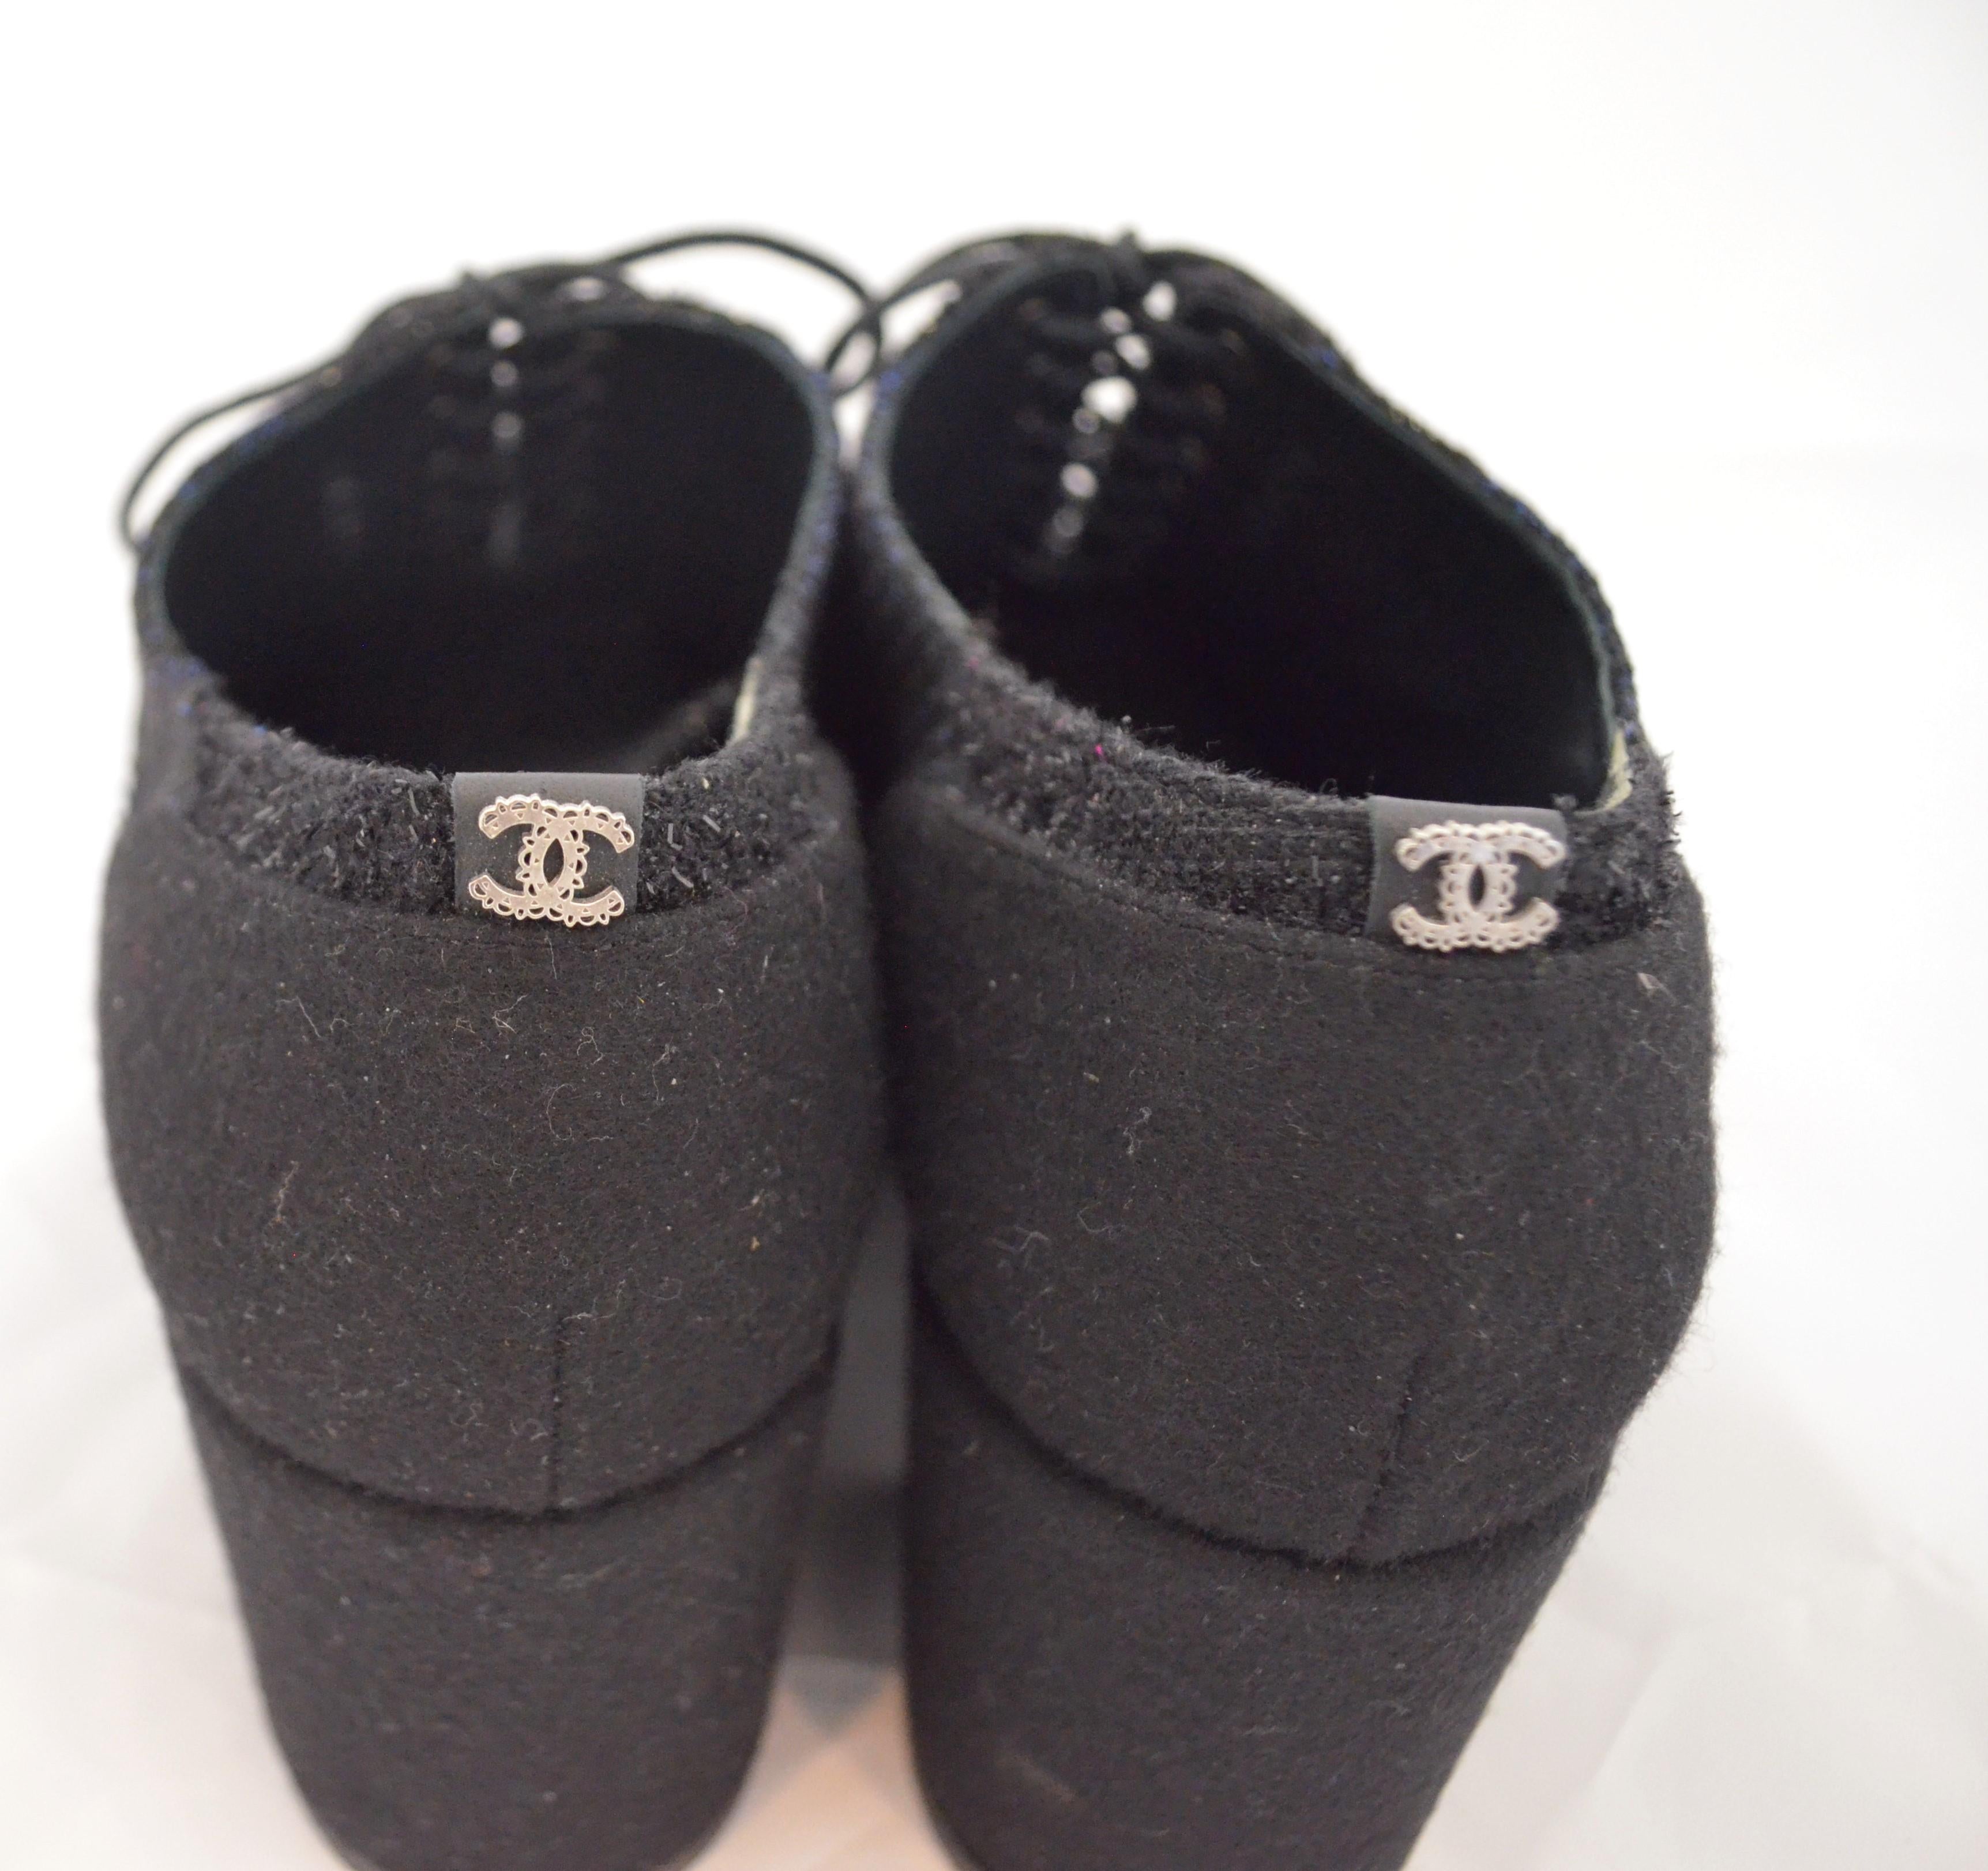 Black Chanel Tweed Oxford Platform Shoes, size 40